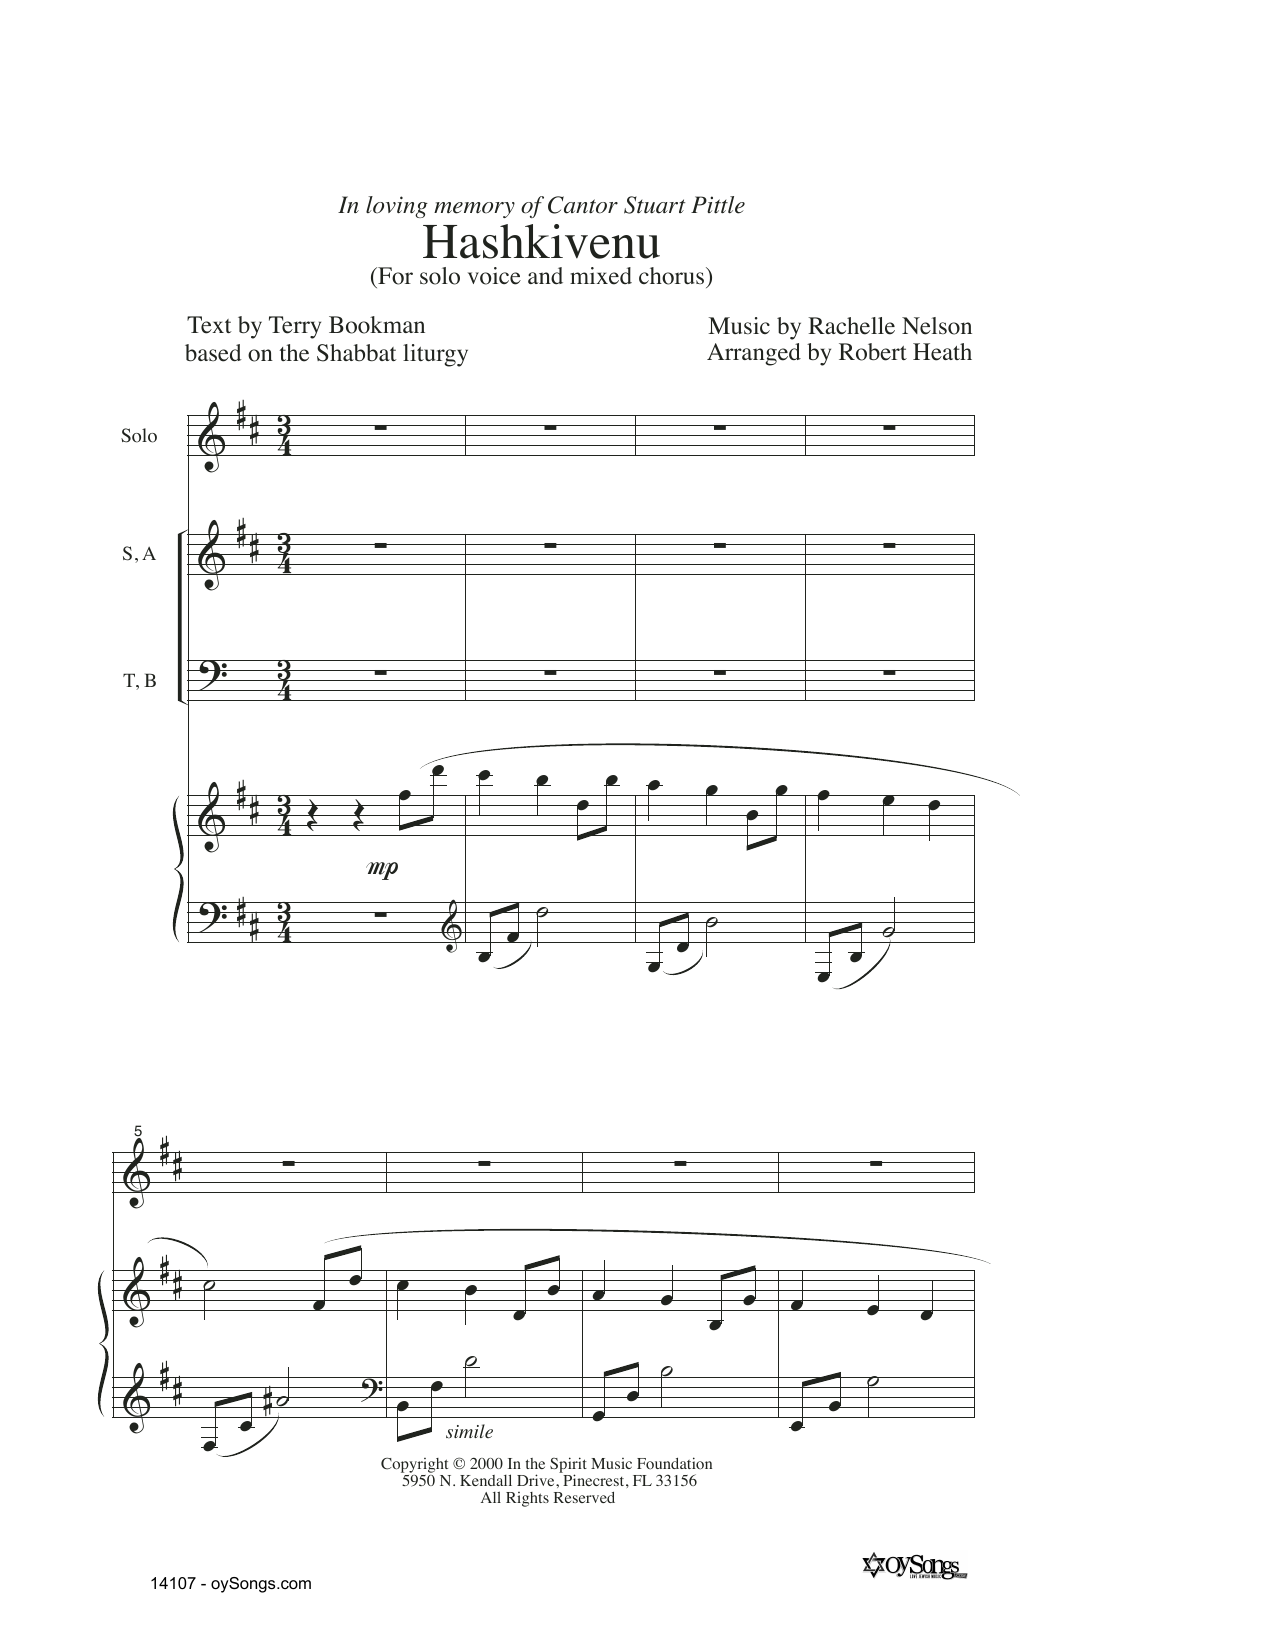 Rachelle Nelson Hashkivenu Sheet Music Notes & Chords for SATB Choir - Download or Print PDF